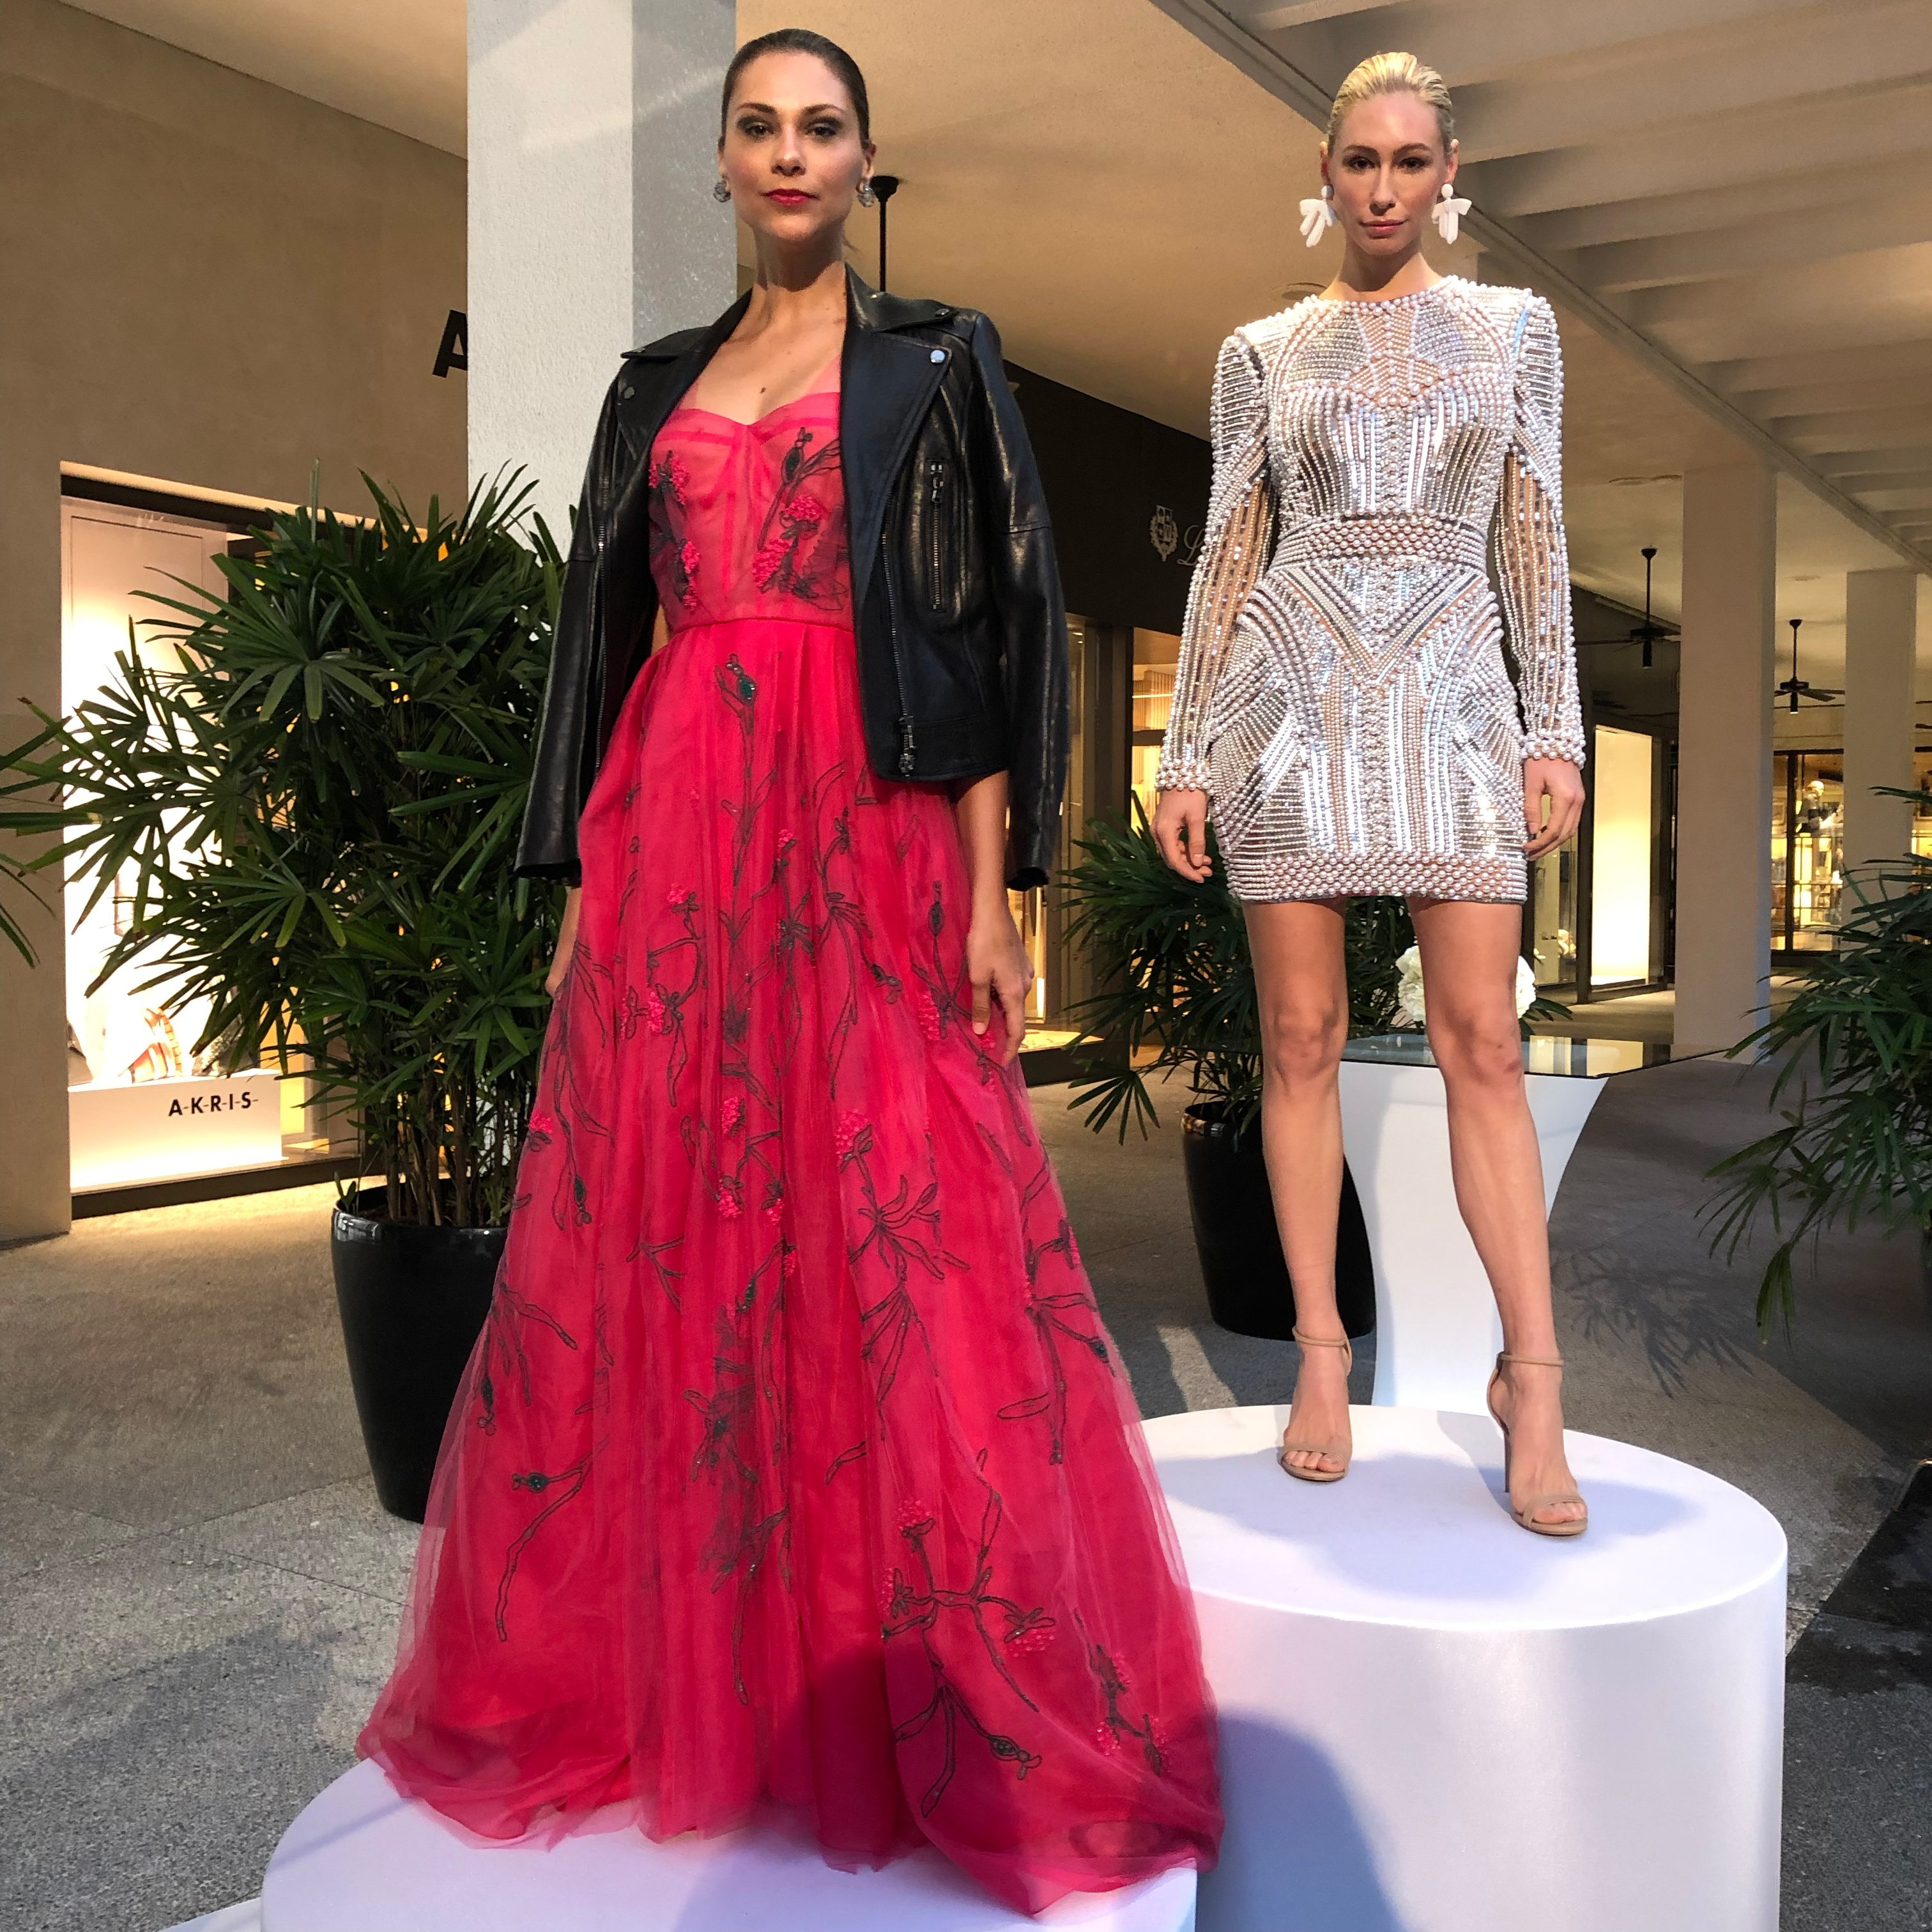 Neiman Marcus models wearing red Carolina Herrera dress and a Balmain sequin cocktail dress